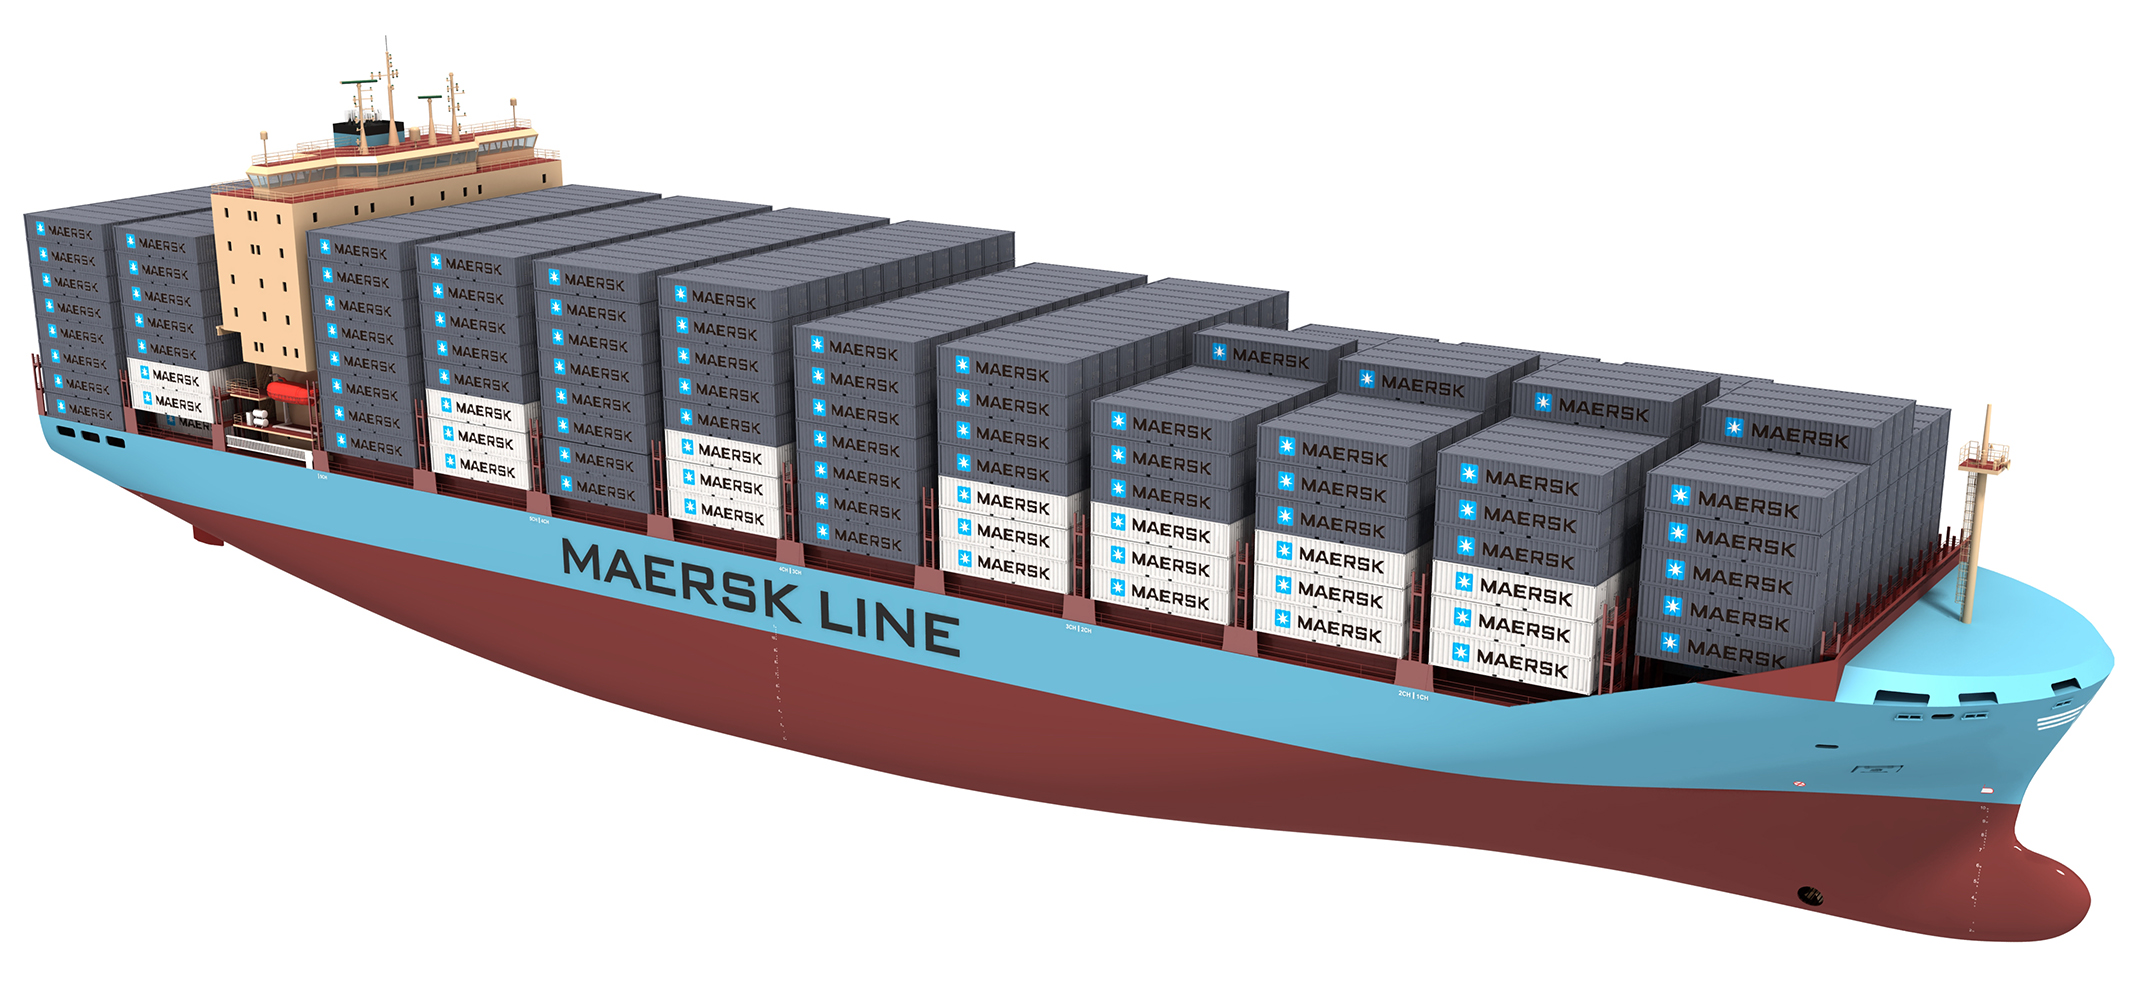 Maersk-ice-class-schematics